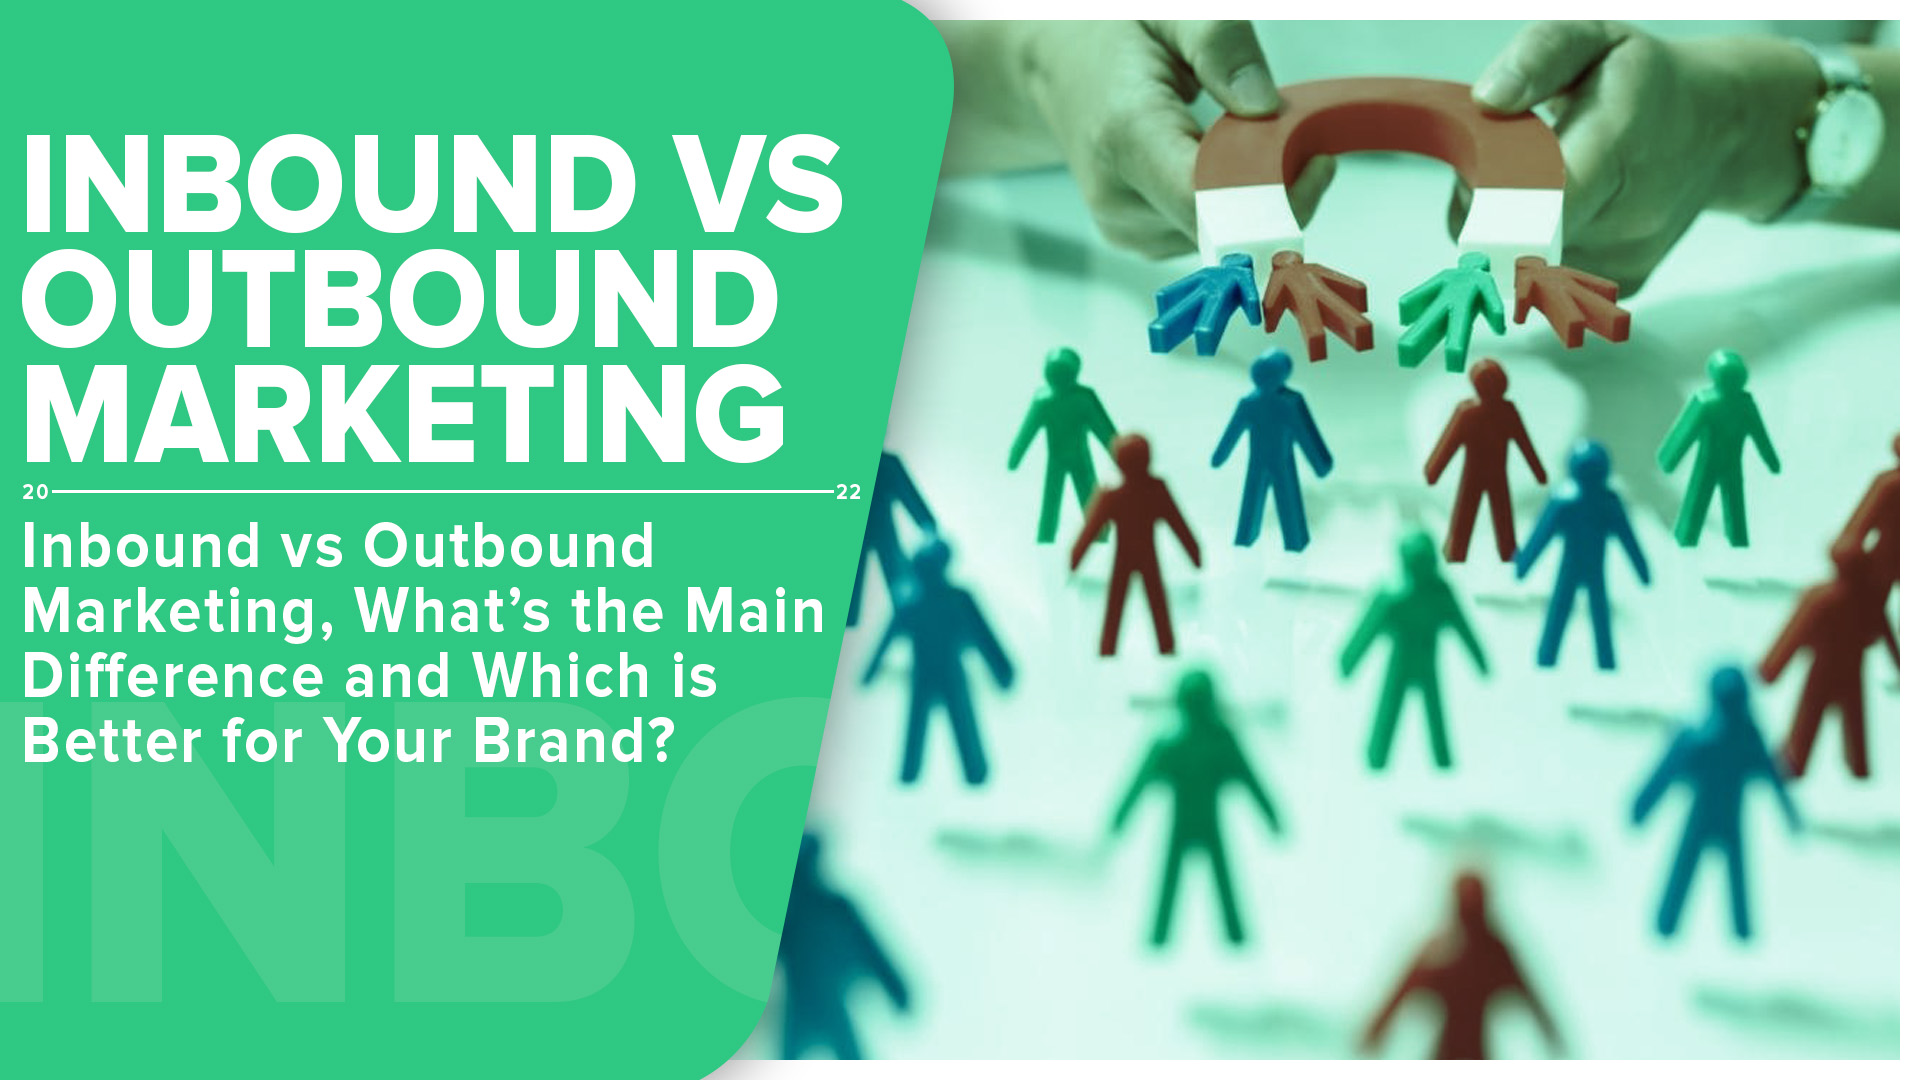 inbound vs outbound marketing cover image